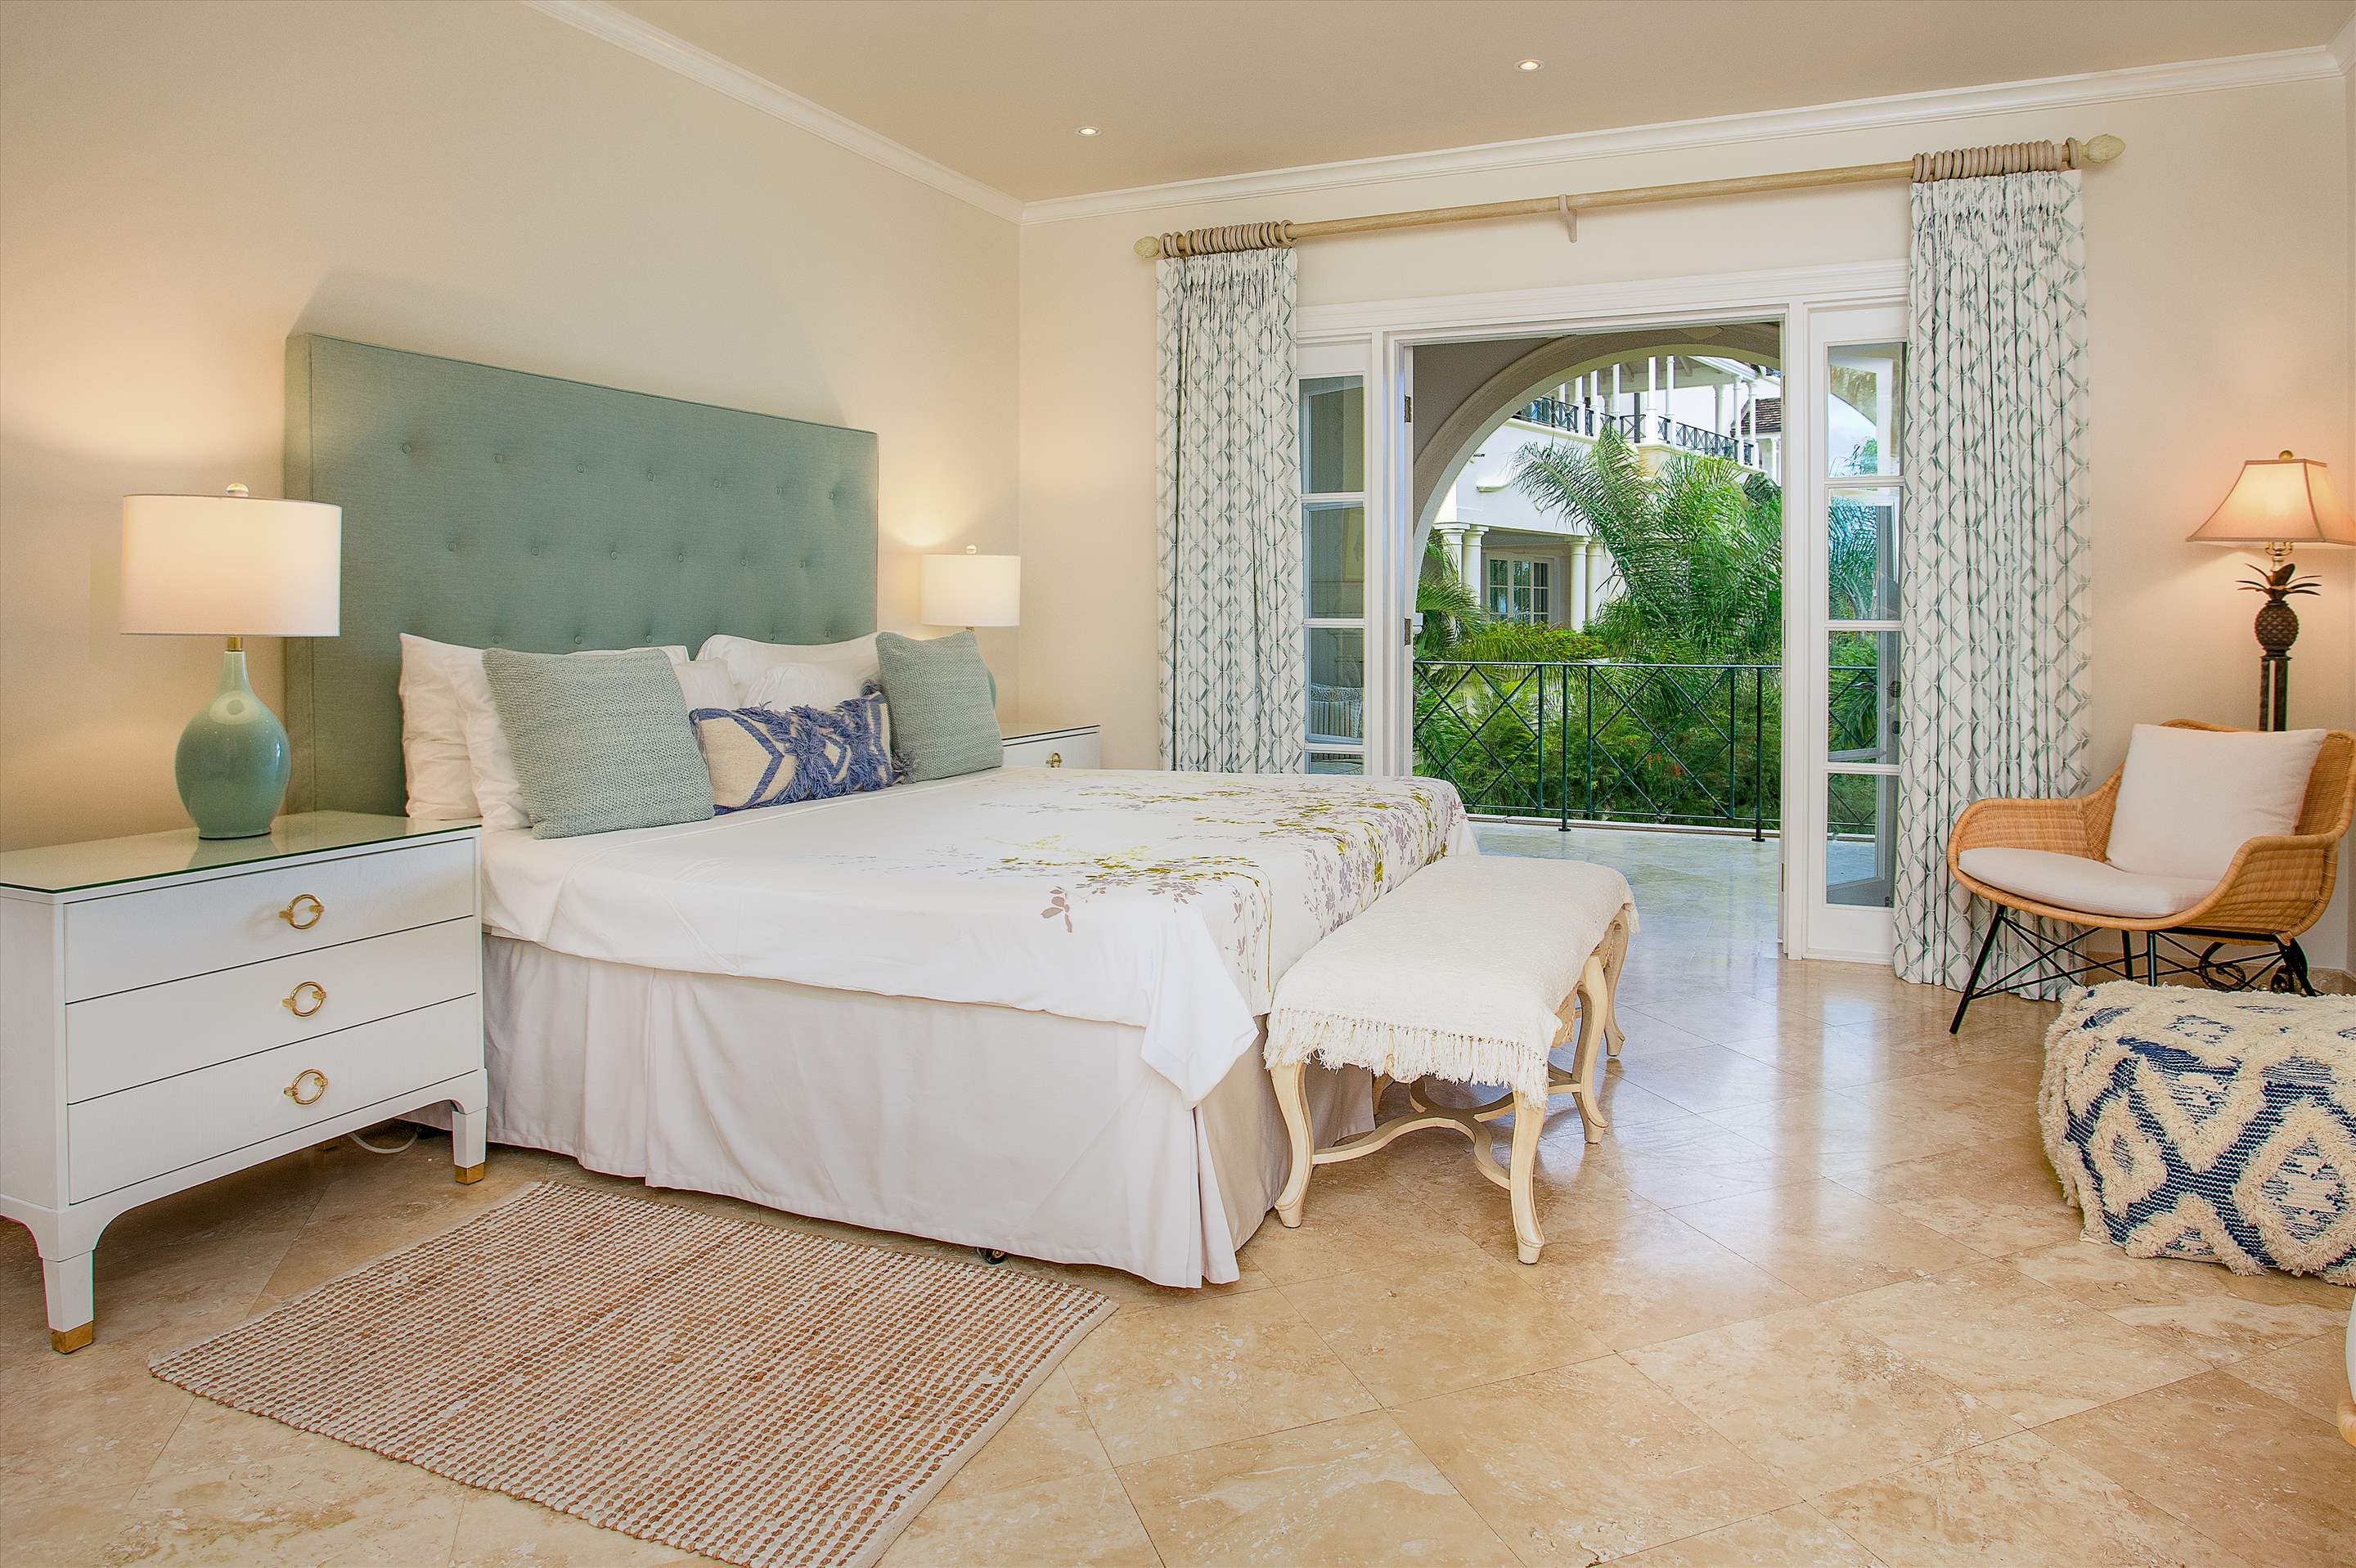 Schooner Bay 205, One Bedroom rate, 1 bedroom apartment in St. James & West Coast, Barbados Photo #7